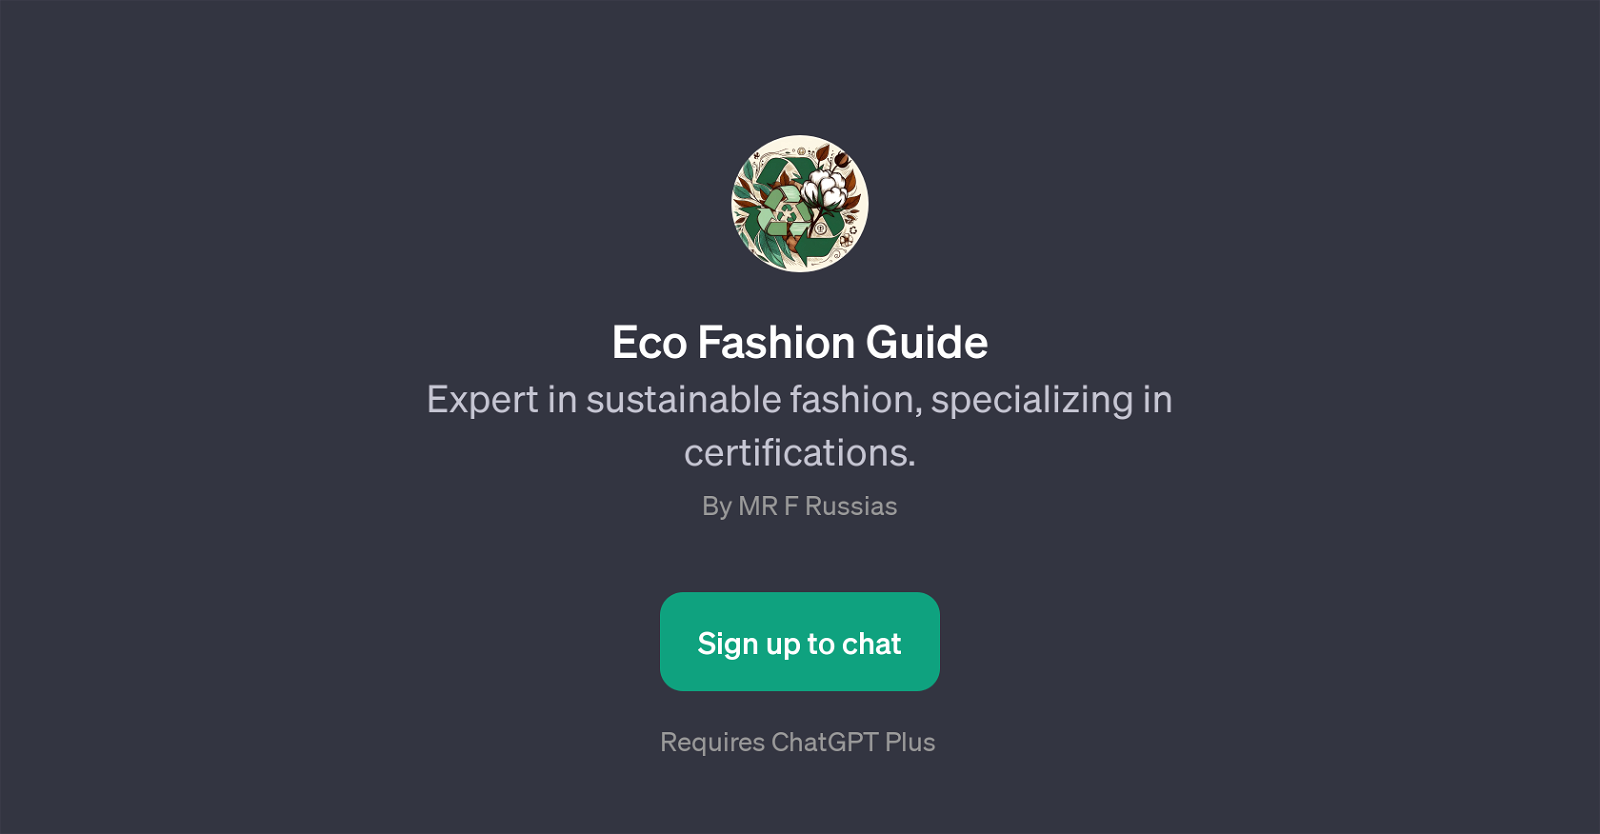 Eco Fashion Guide website